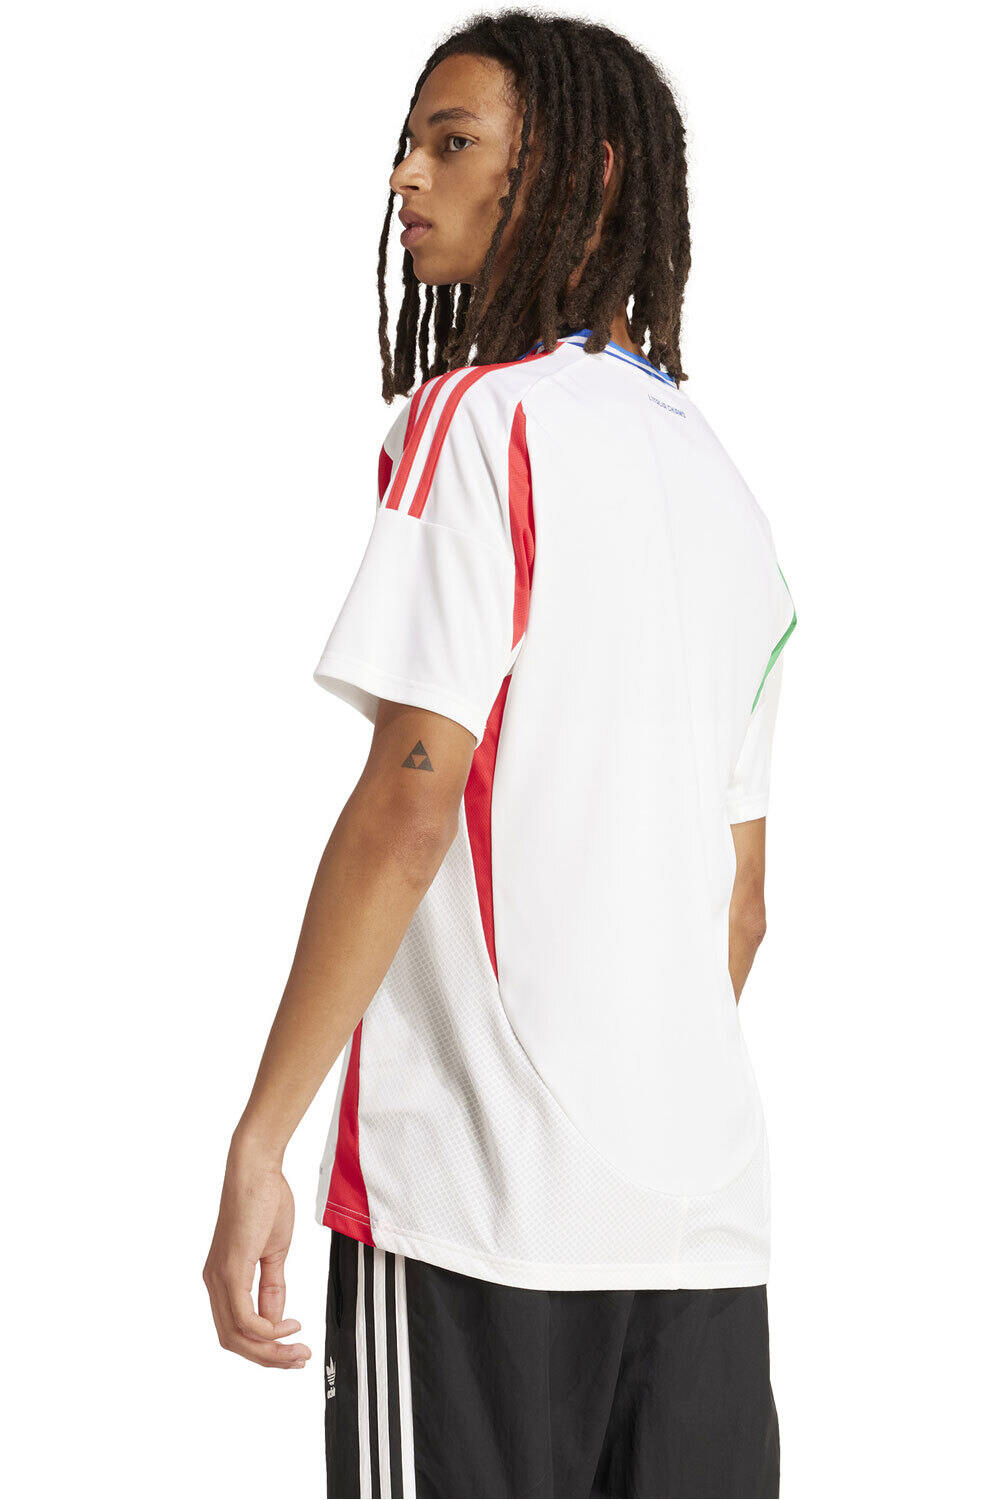 adidas camiseta de fútbol oficiales ITALIA 24 AW JSY vista trasera